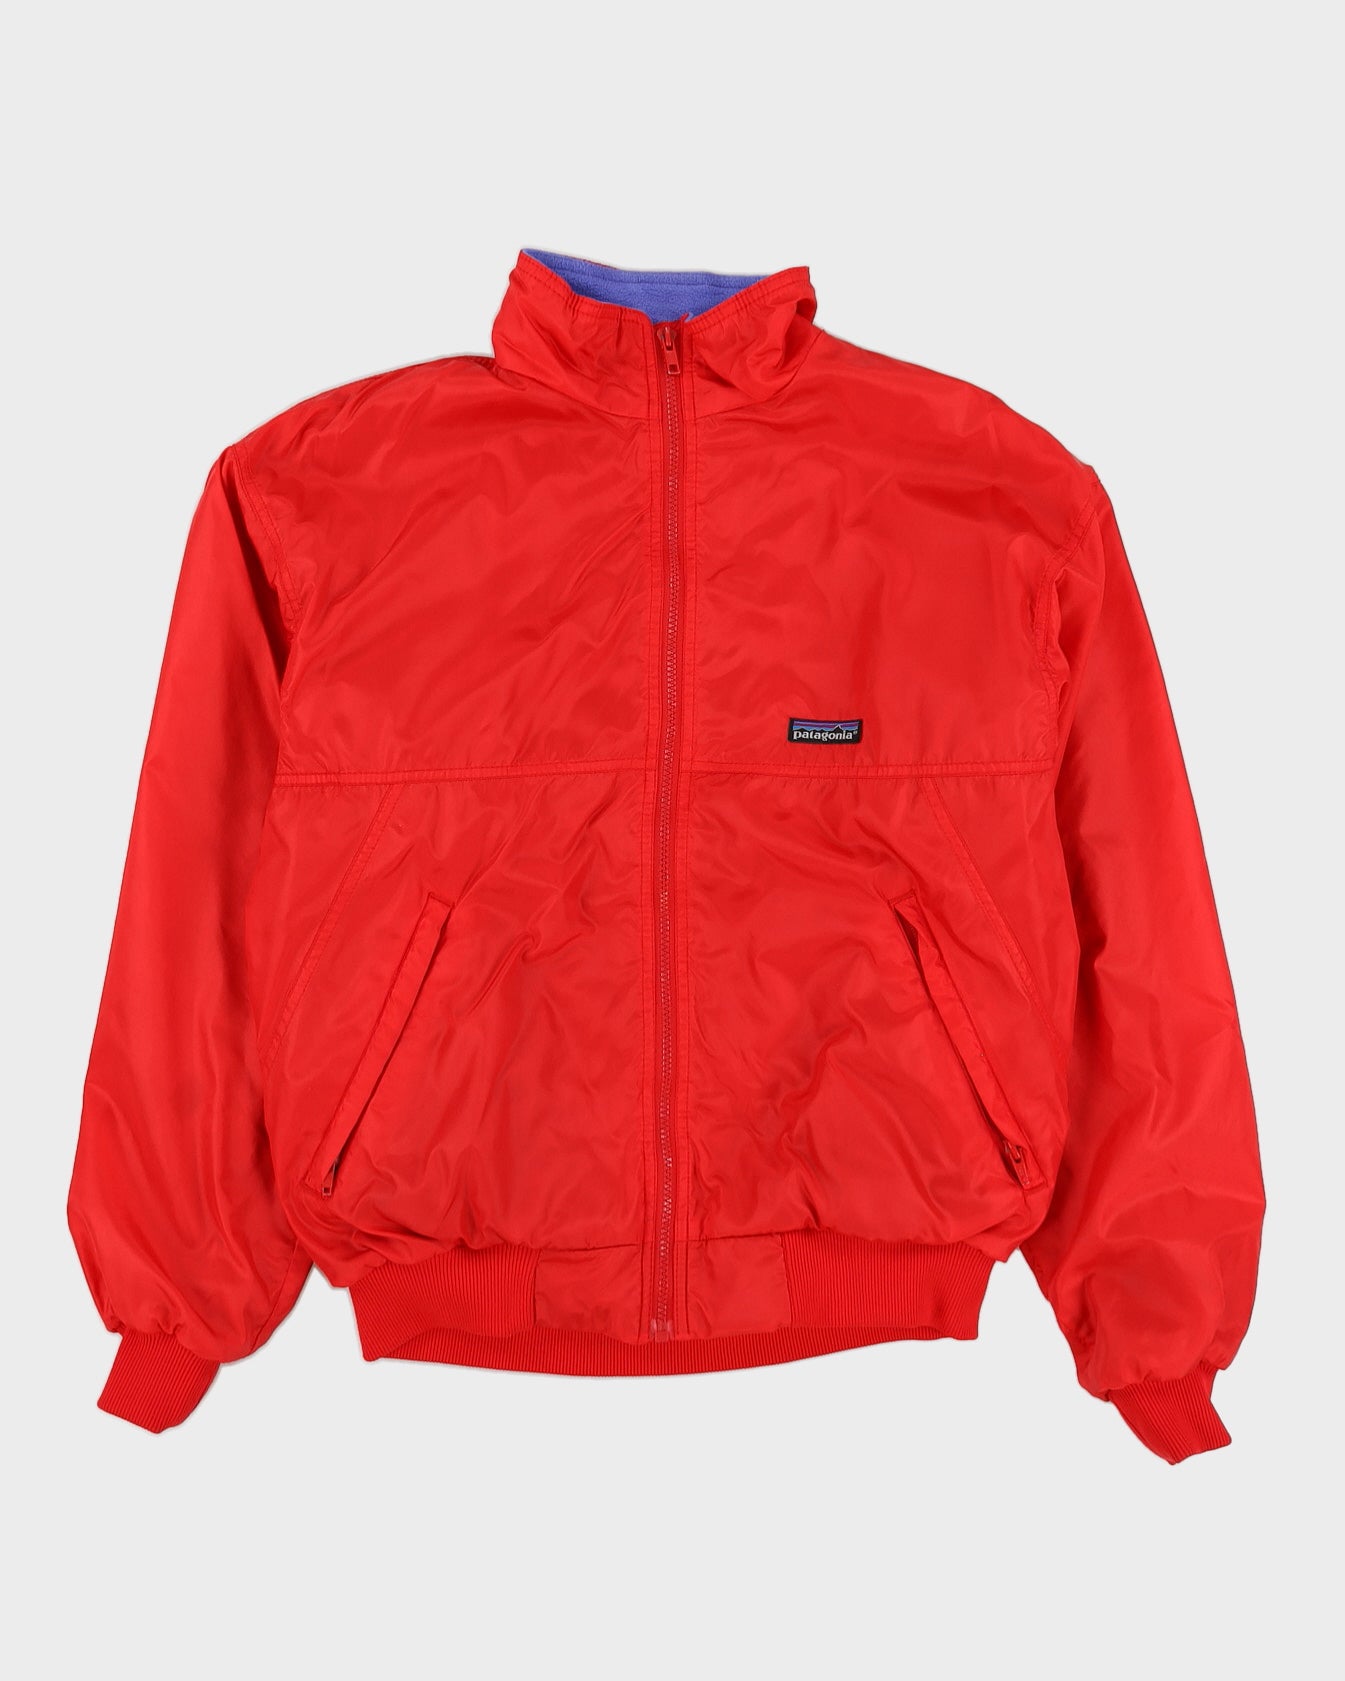 Vintage 90s Patagonia Red Fleece Lined Jacket - M